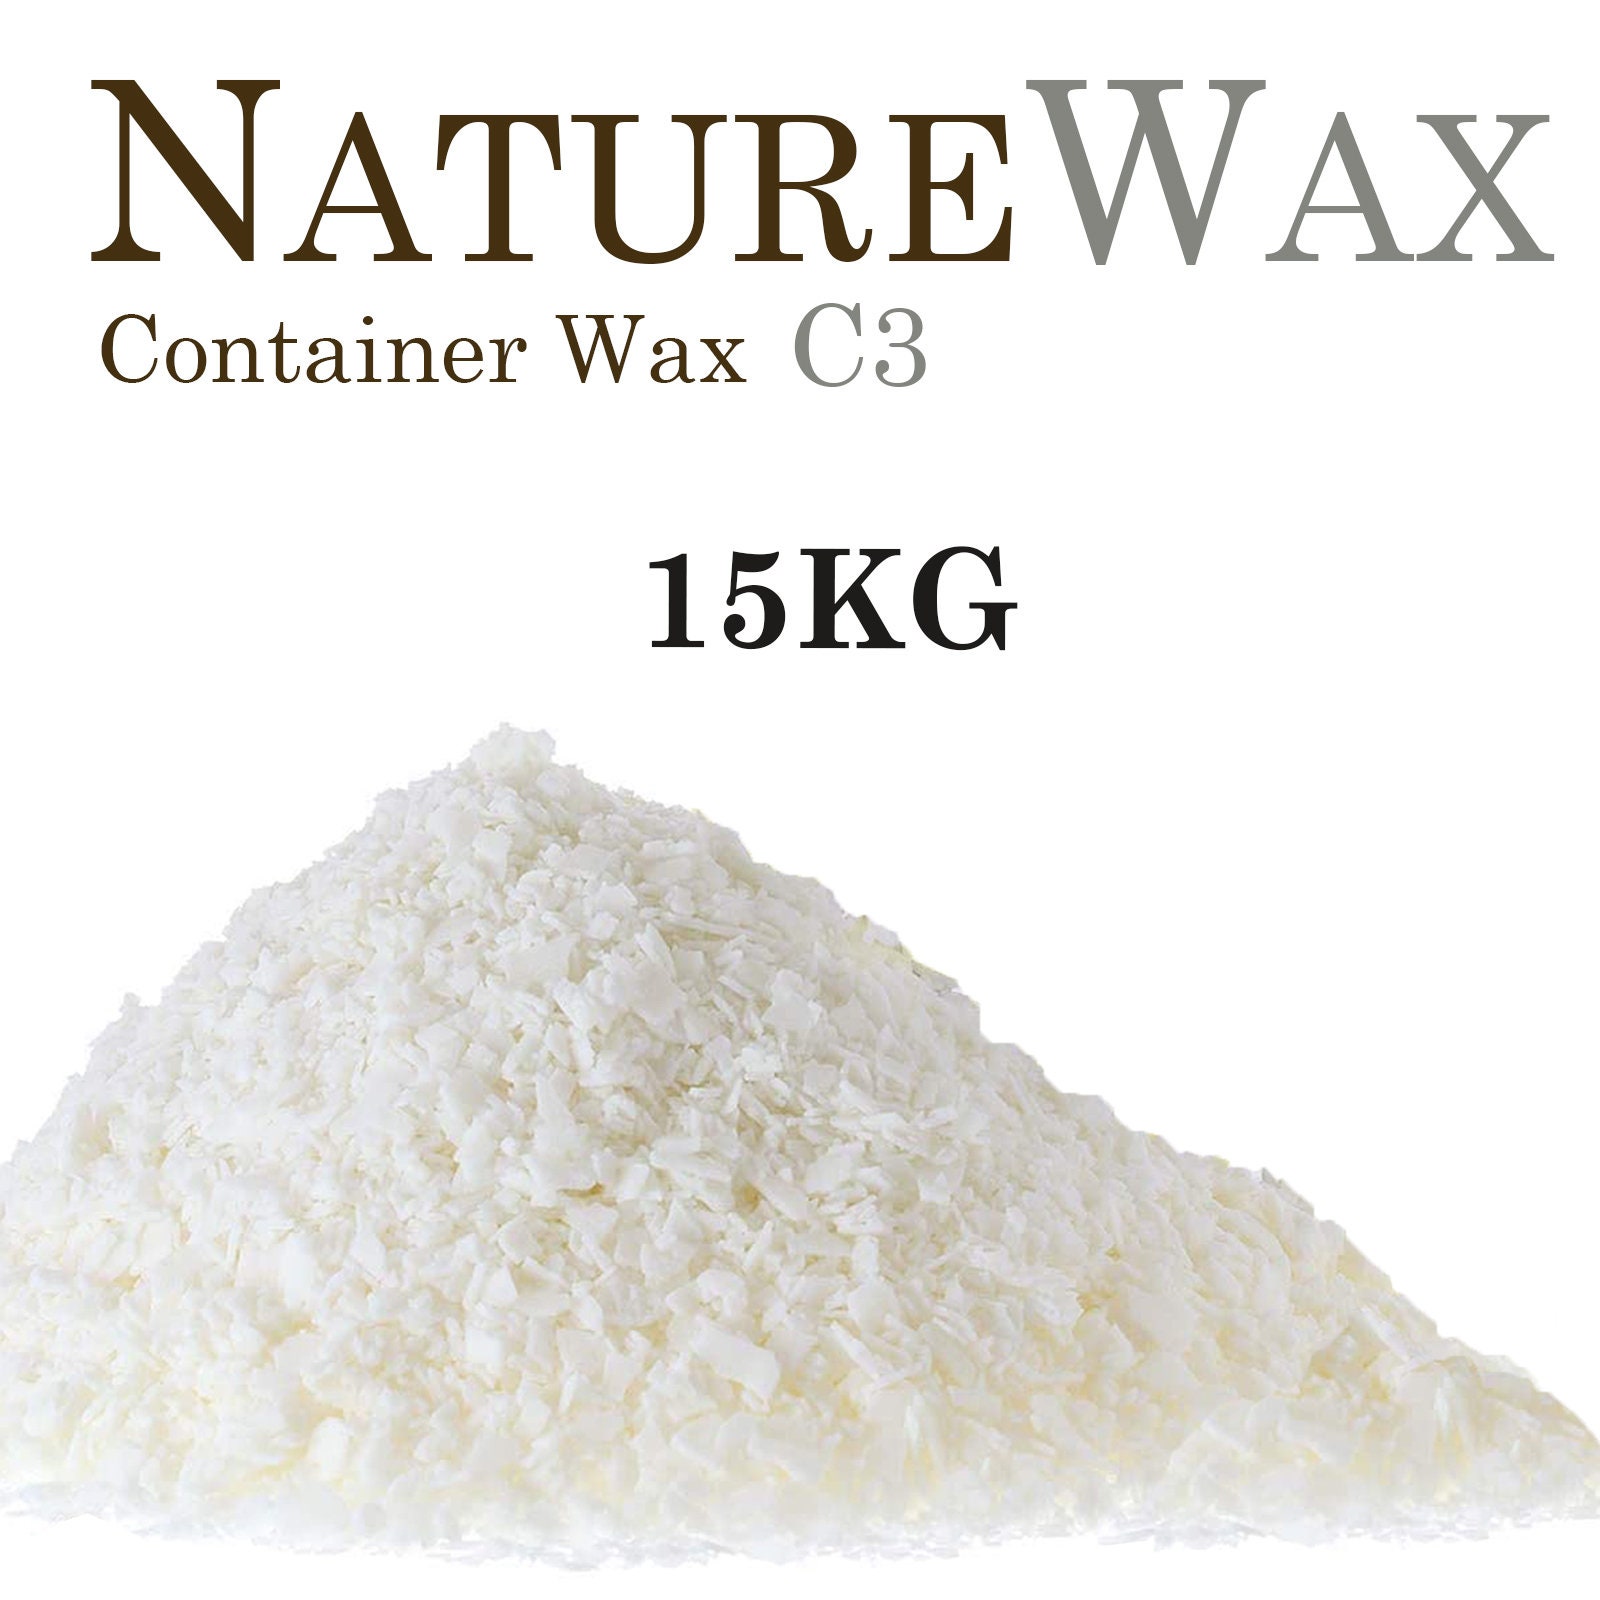 NatureWax C-3 (All Natural Soy Wax)